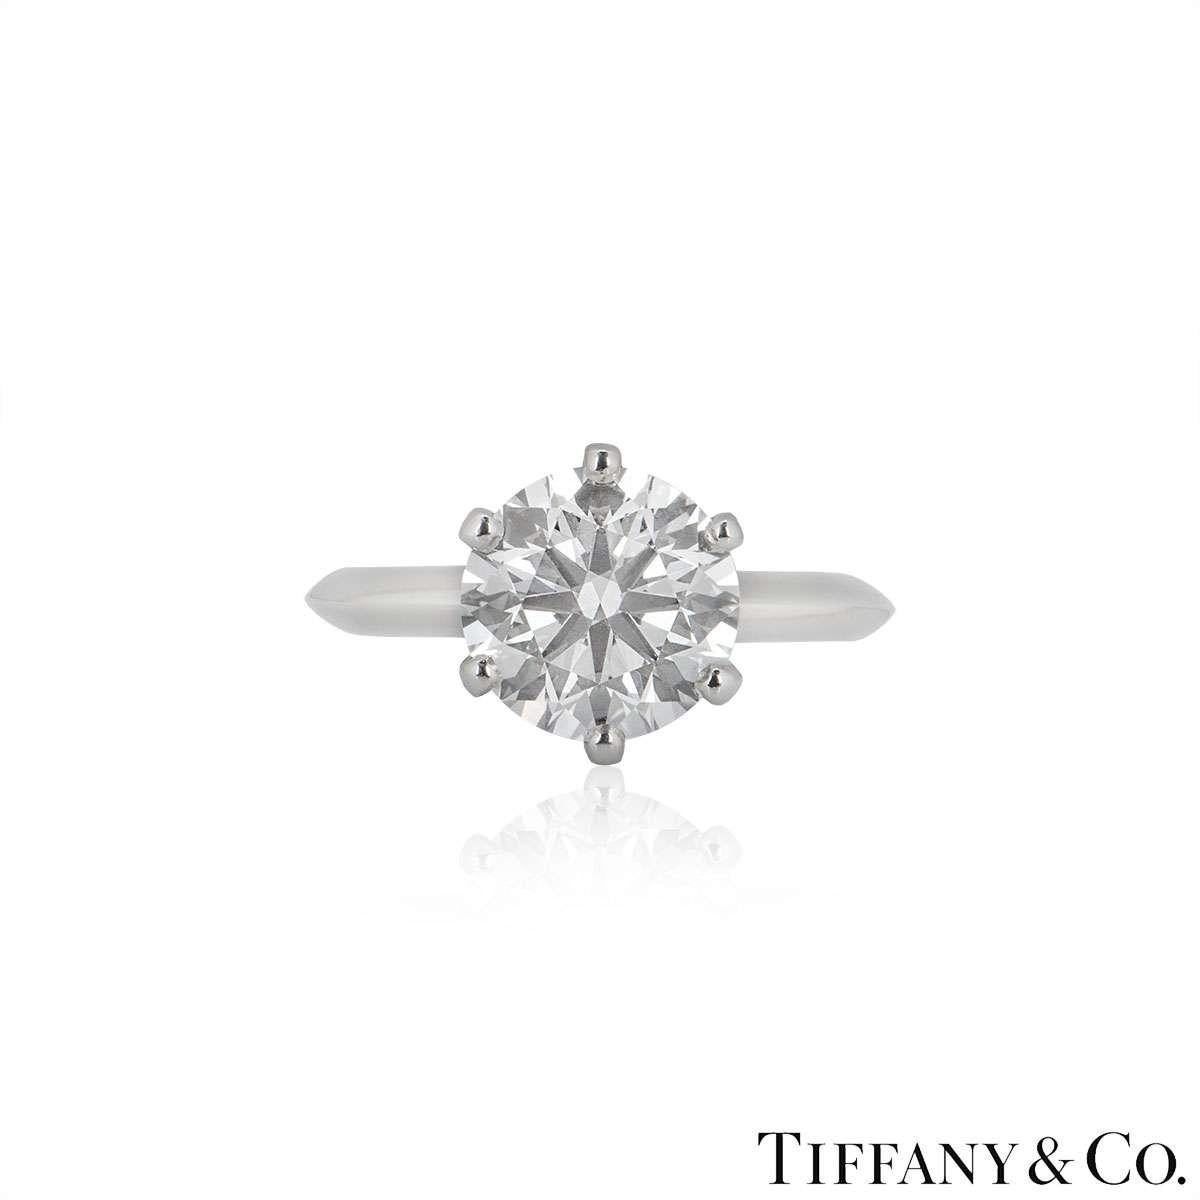 Round Cut Tiffany & Co. Round Brilliant Cut Diamond Ring 2.61 Carat GIA Certified